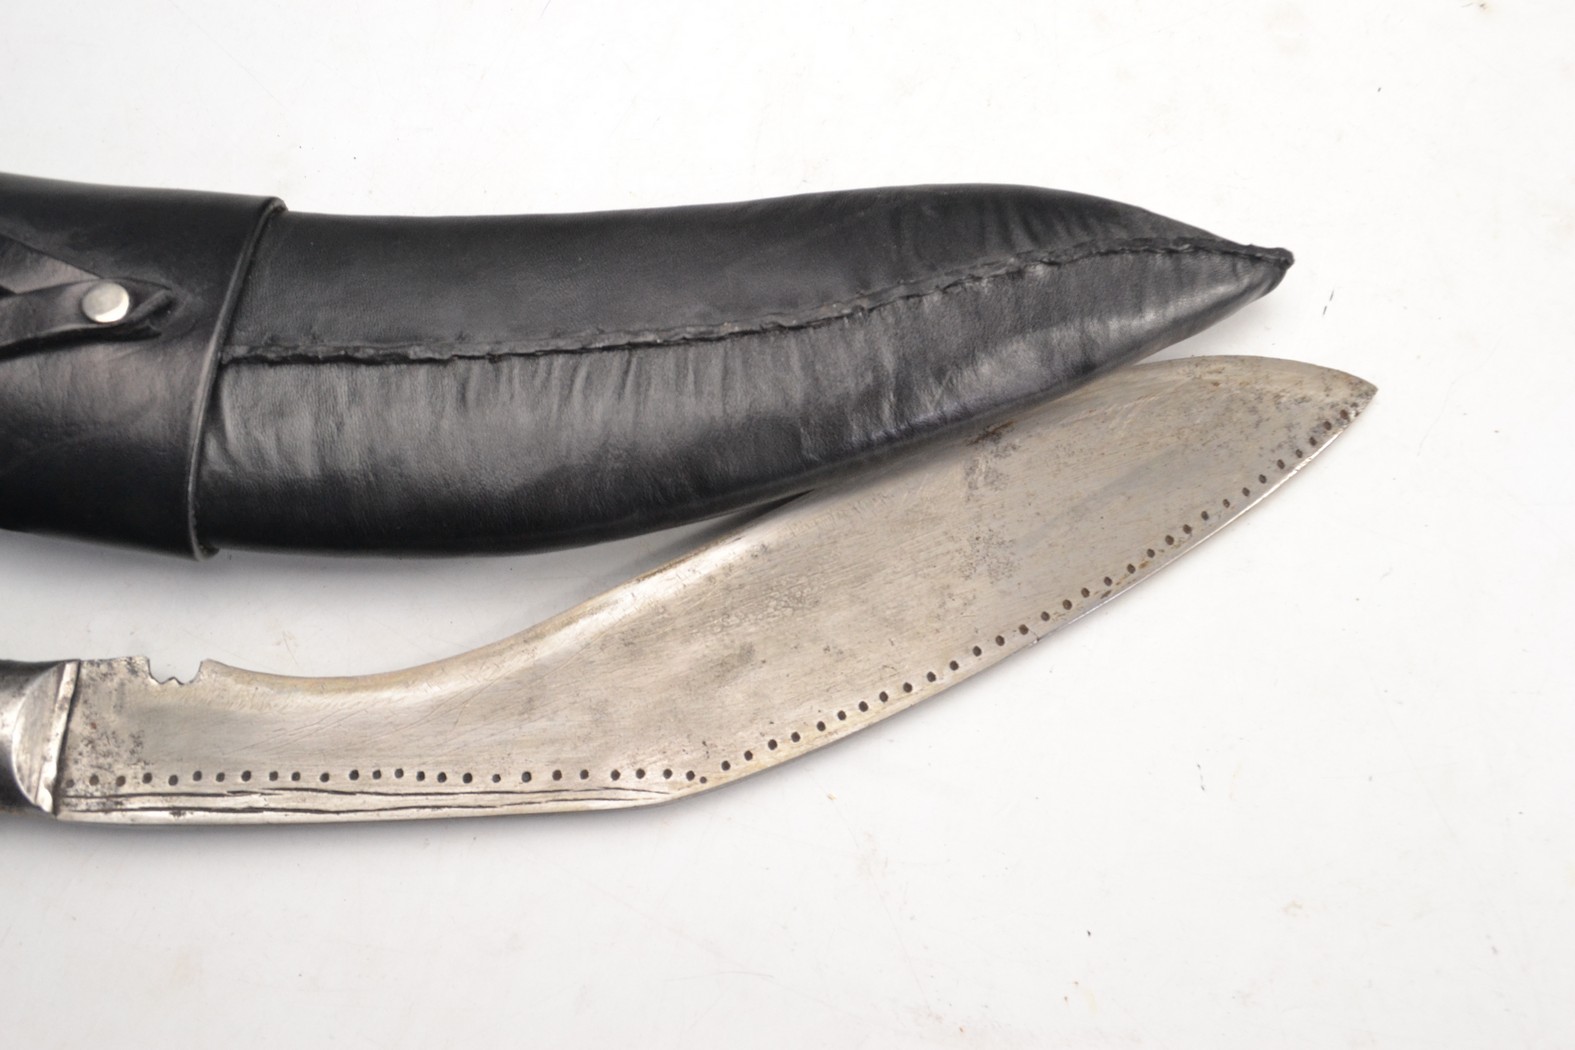 Gurkha Kukri knife with black leather sheath, blade length 30cm approx. - Image 7 of 10